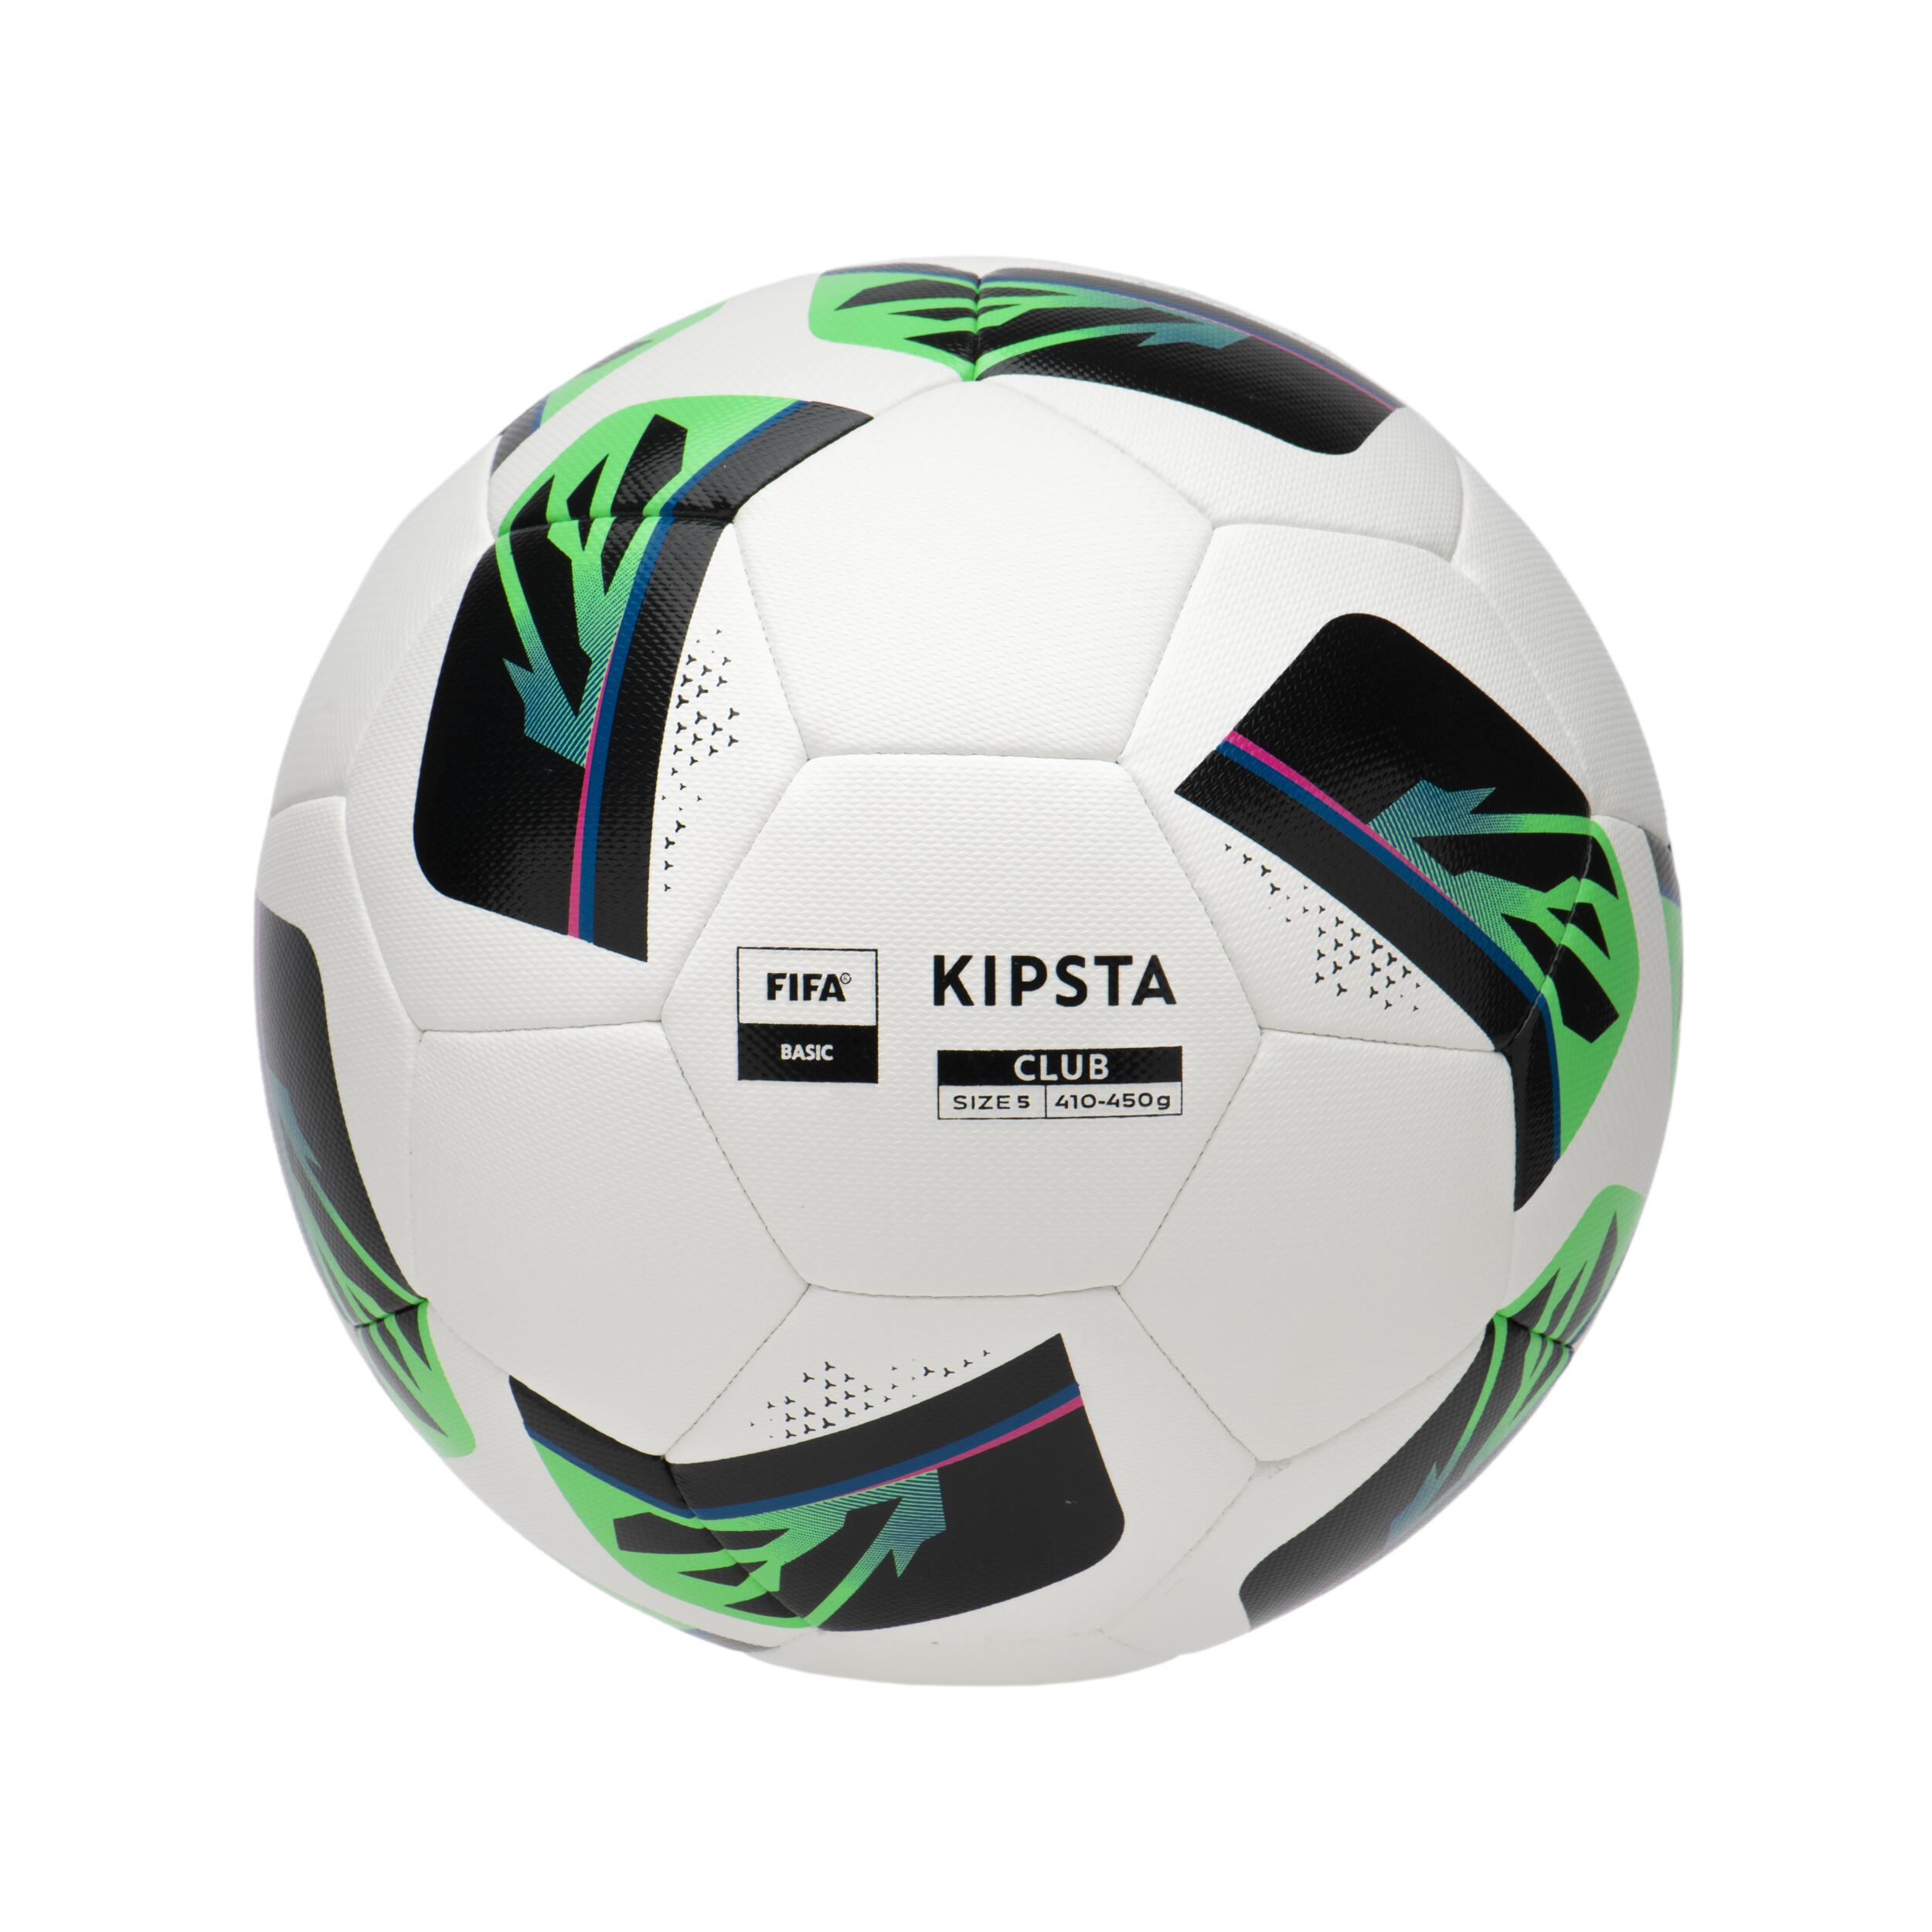 KIPSTA Size 5 FIFA Basic Football Club Hybrid - White